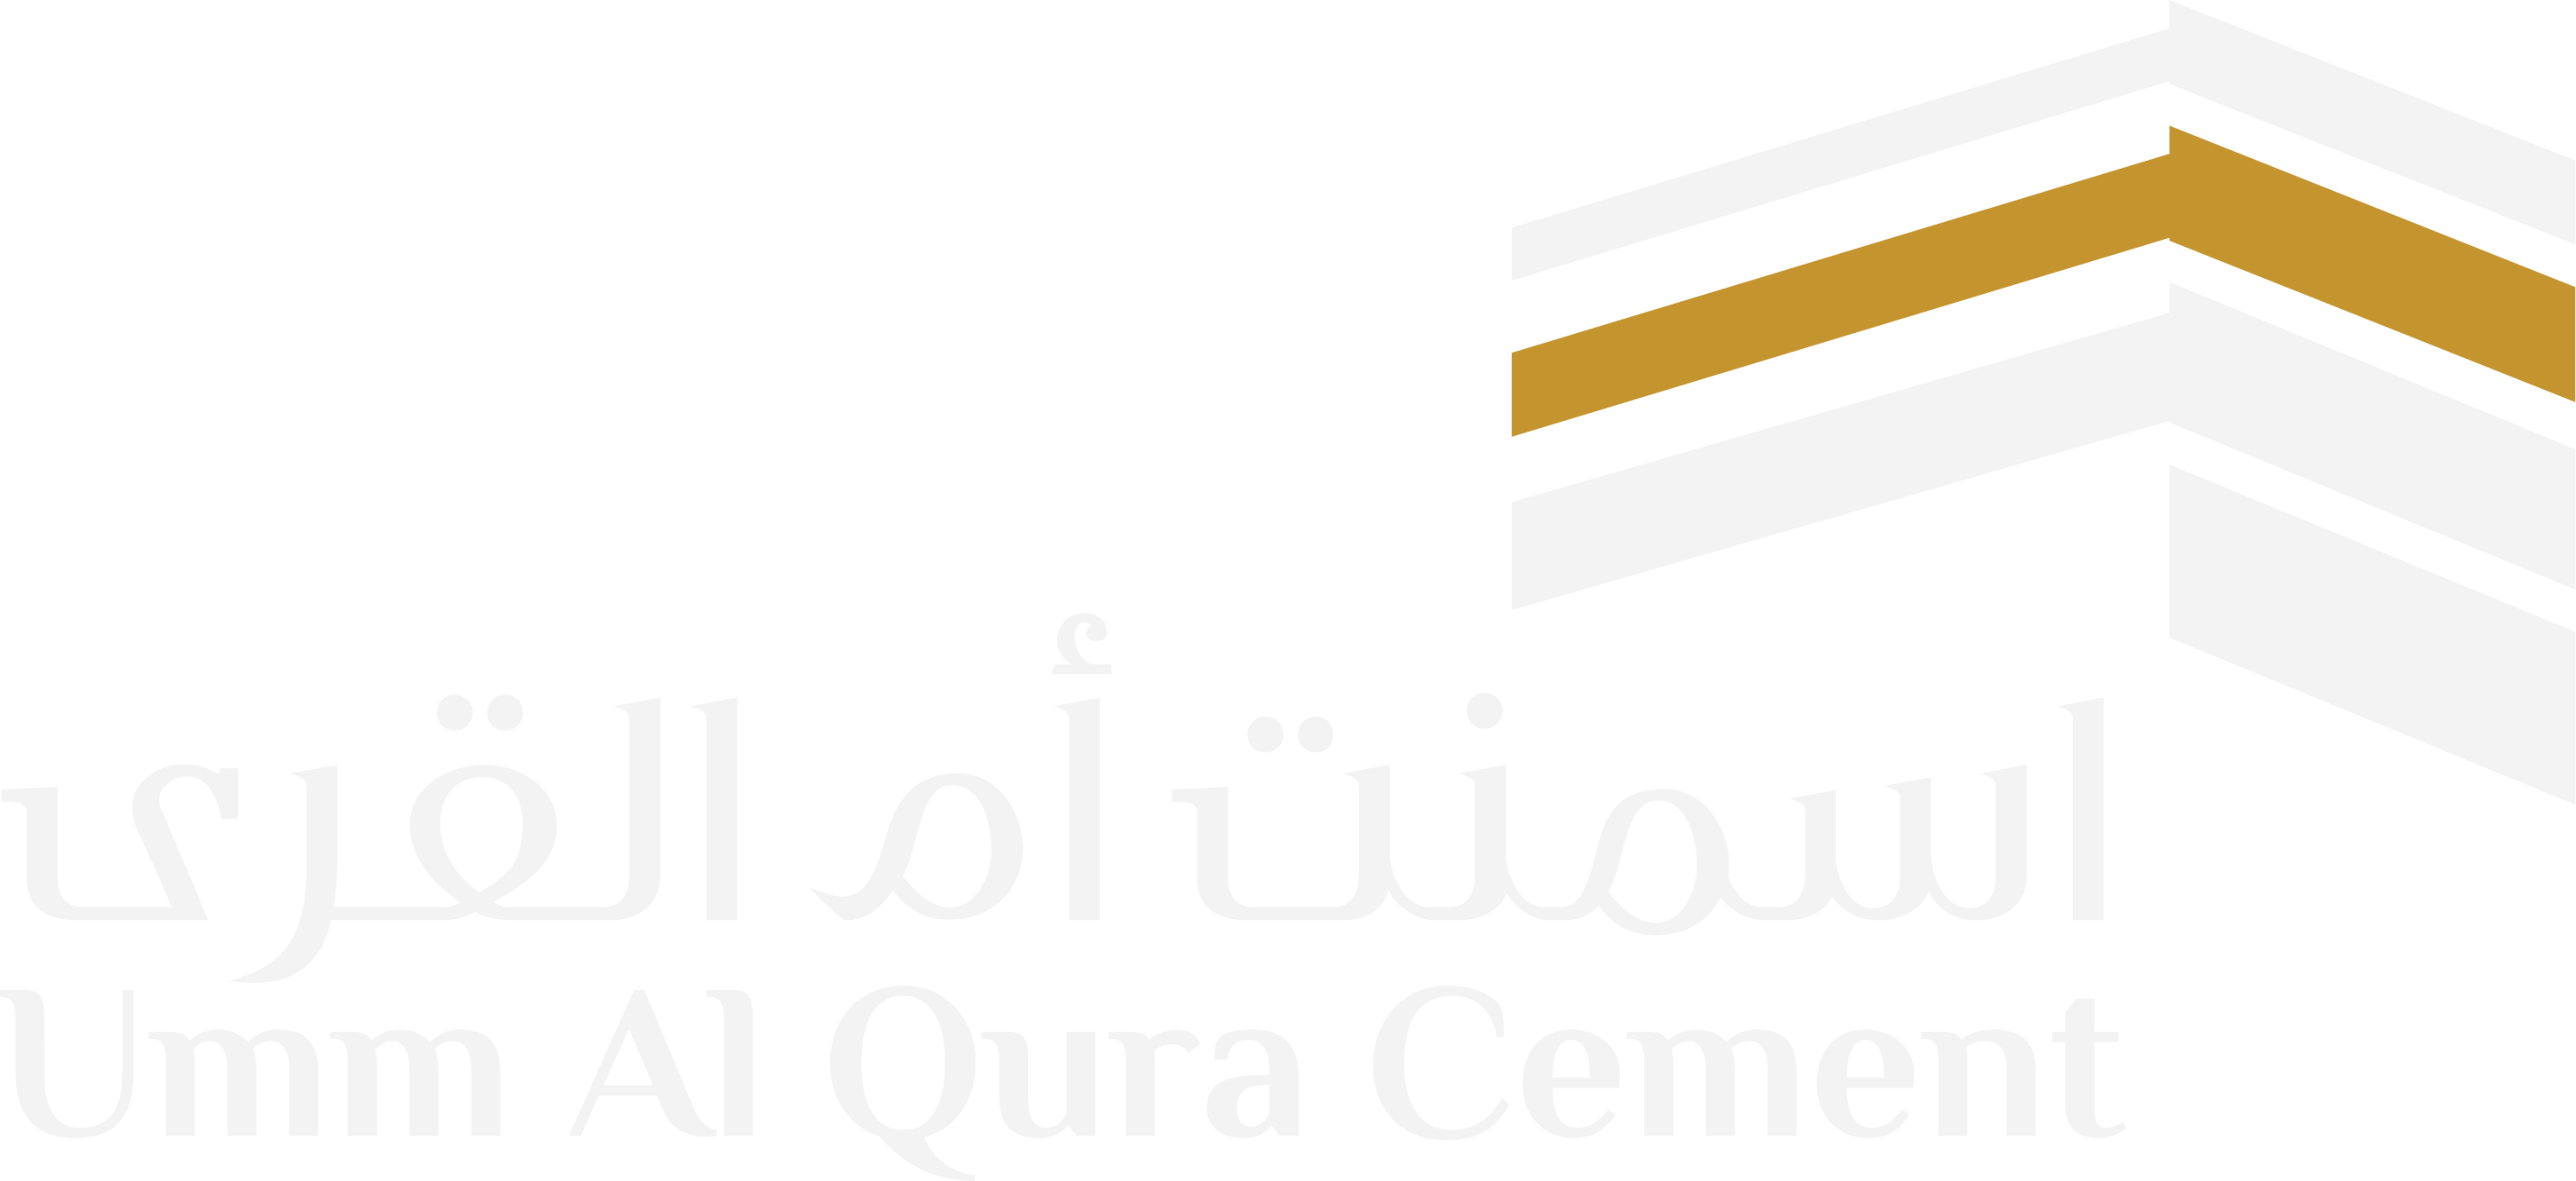 Umm Al-Qura Cement Company logo large for dark backgrounds (transparent PNG)